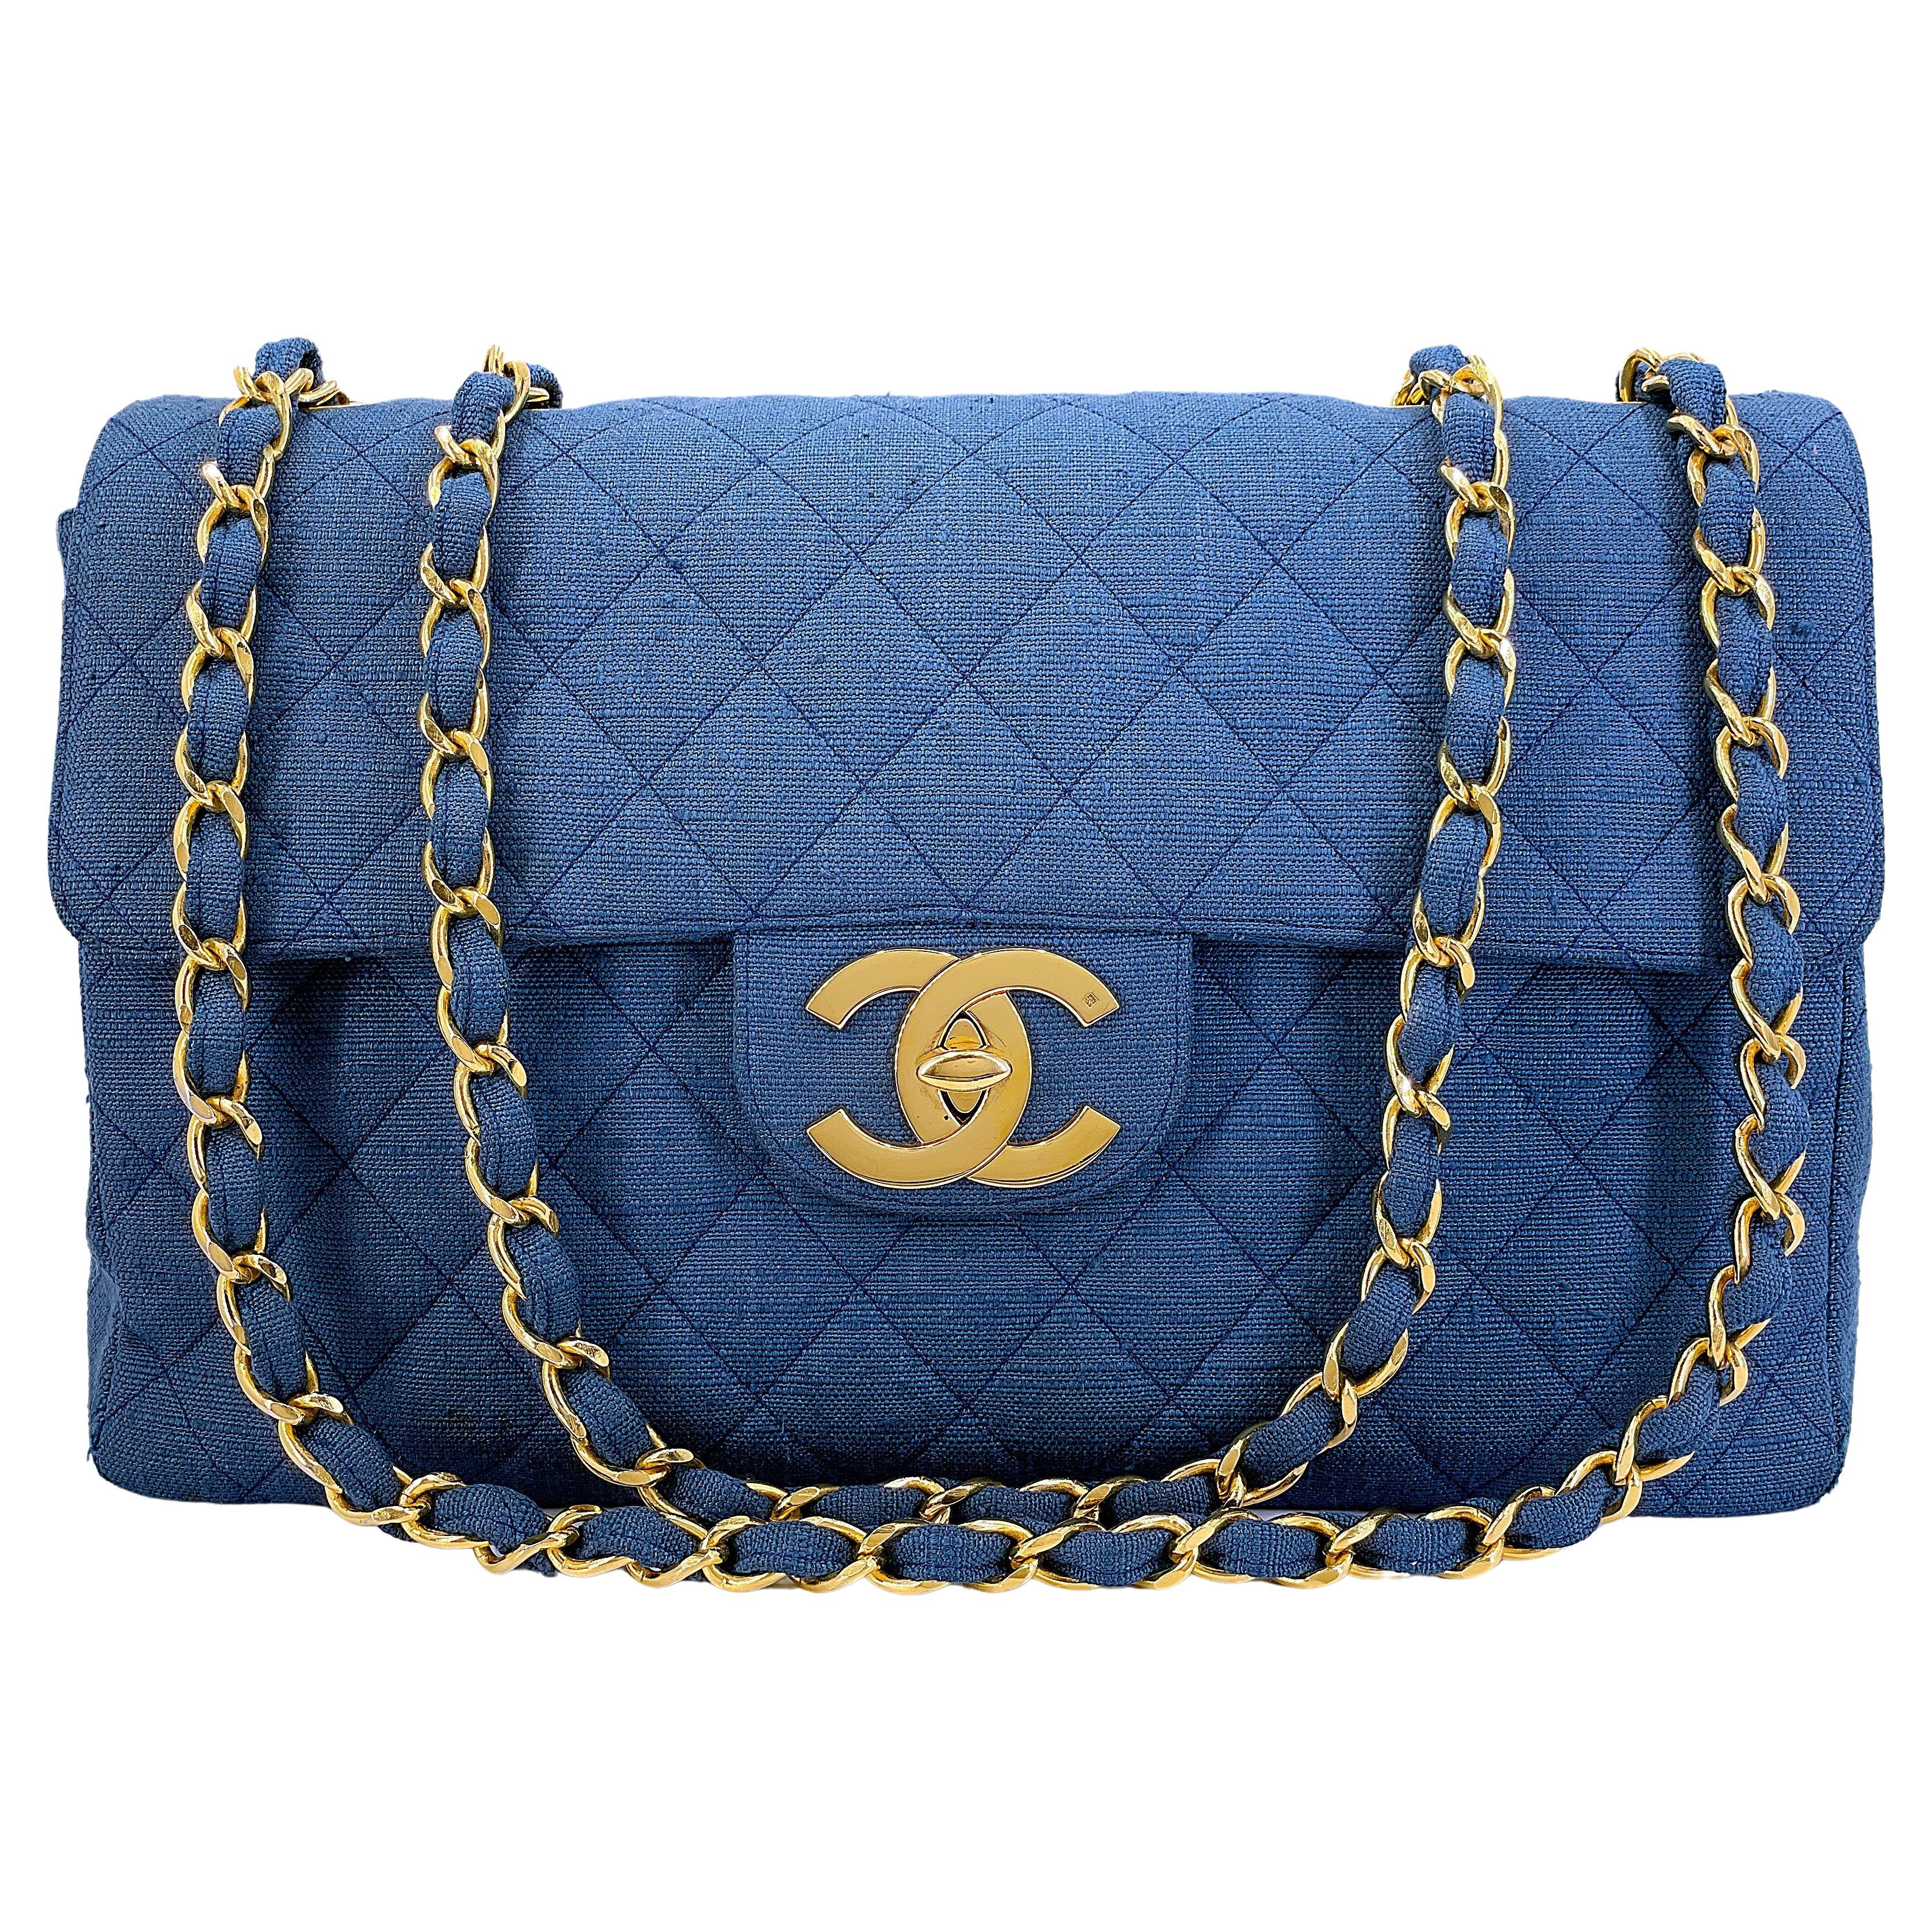 Rare Chanel Vintage Maxi Jumbo XL Flap Bag Fabric Navy blue , GHW